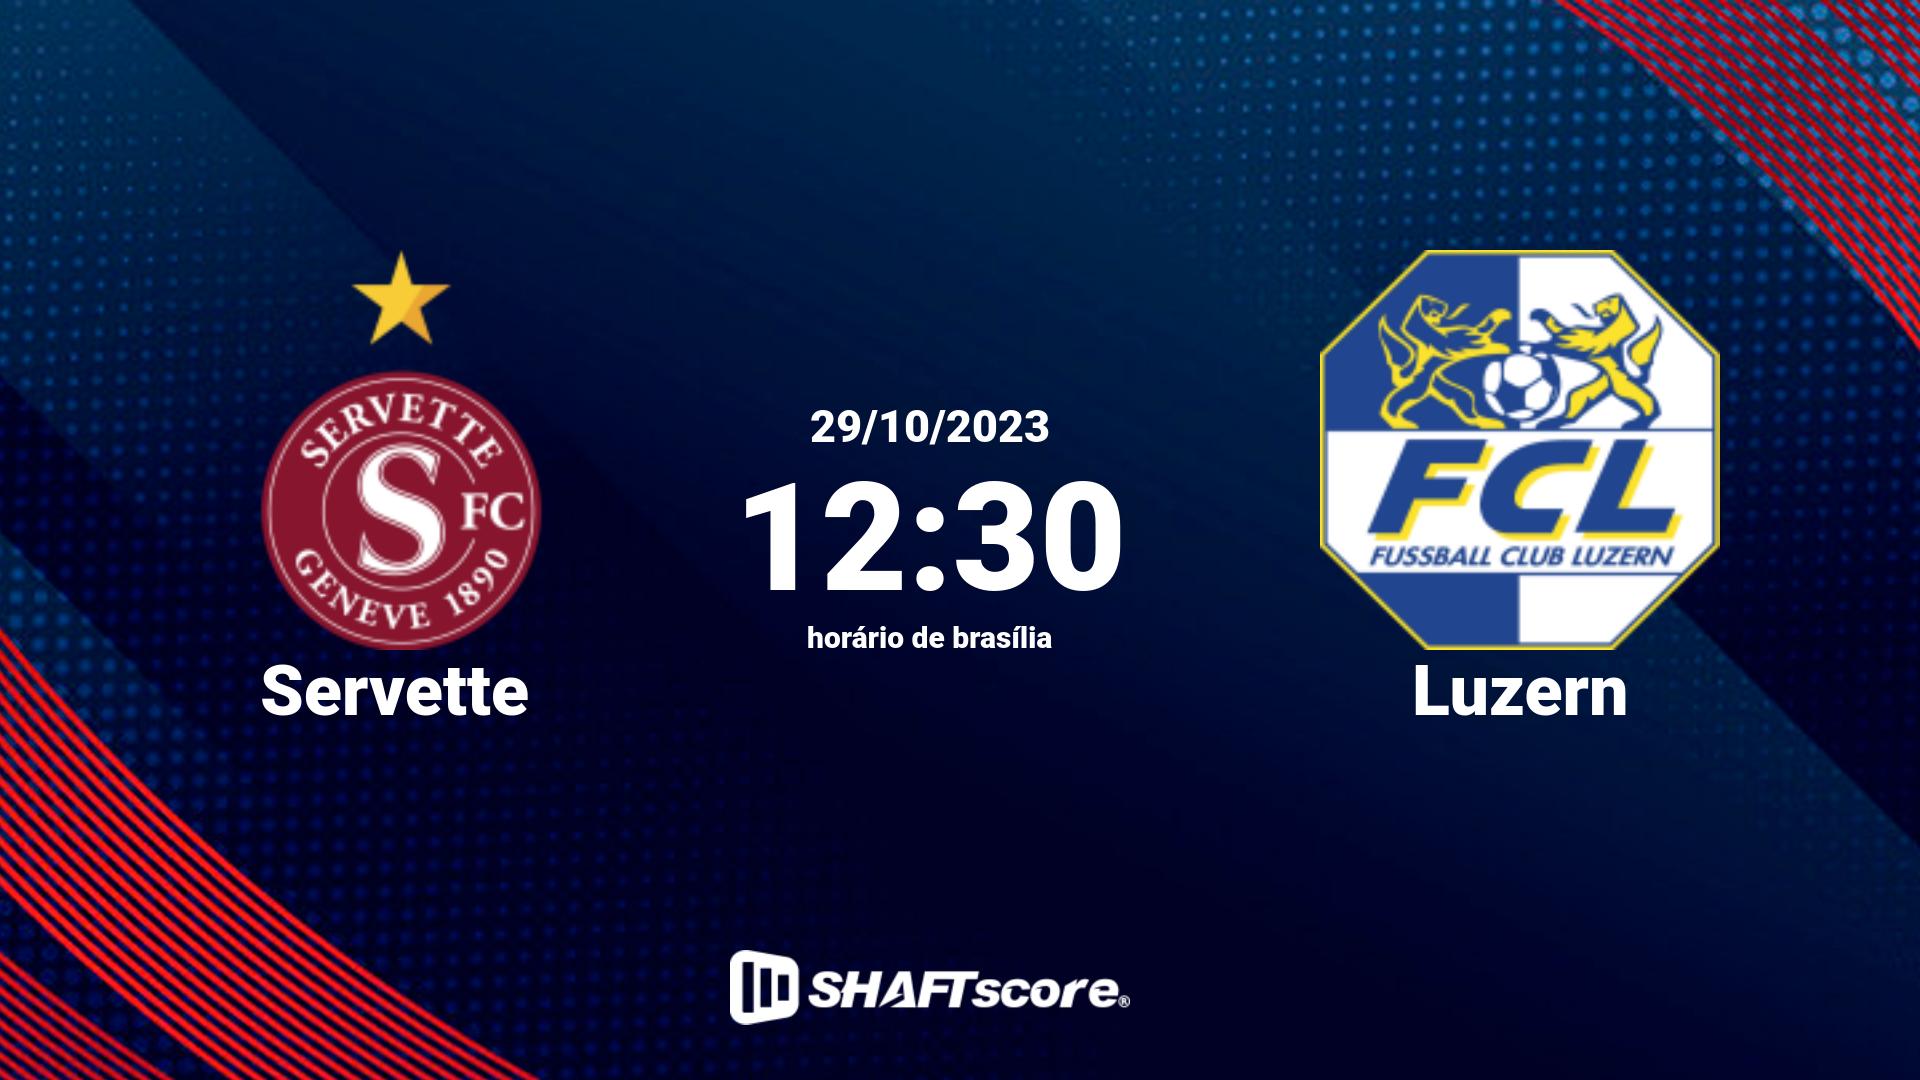 Estatísticas do jogo Servette vs Luzern 29.10 12:30